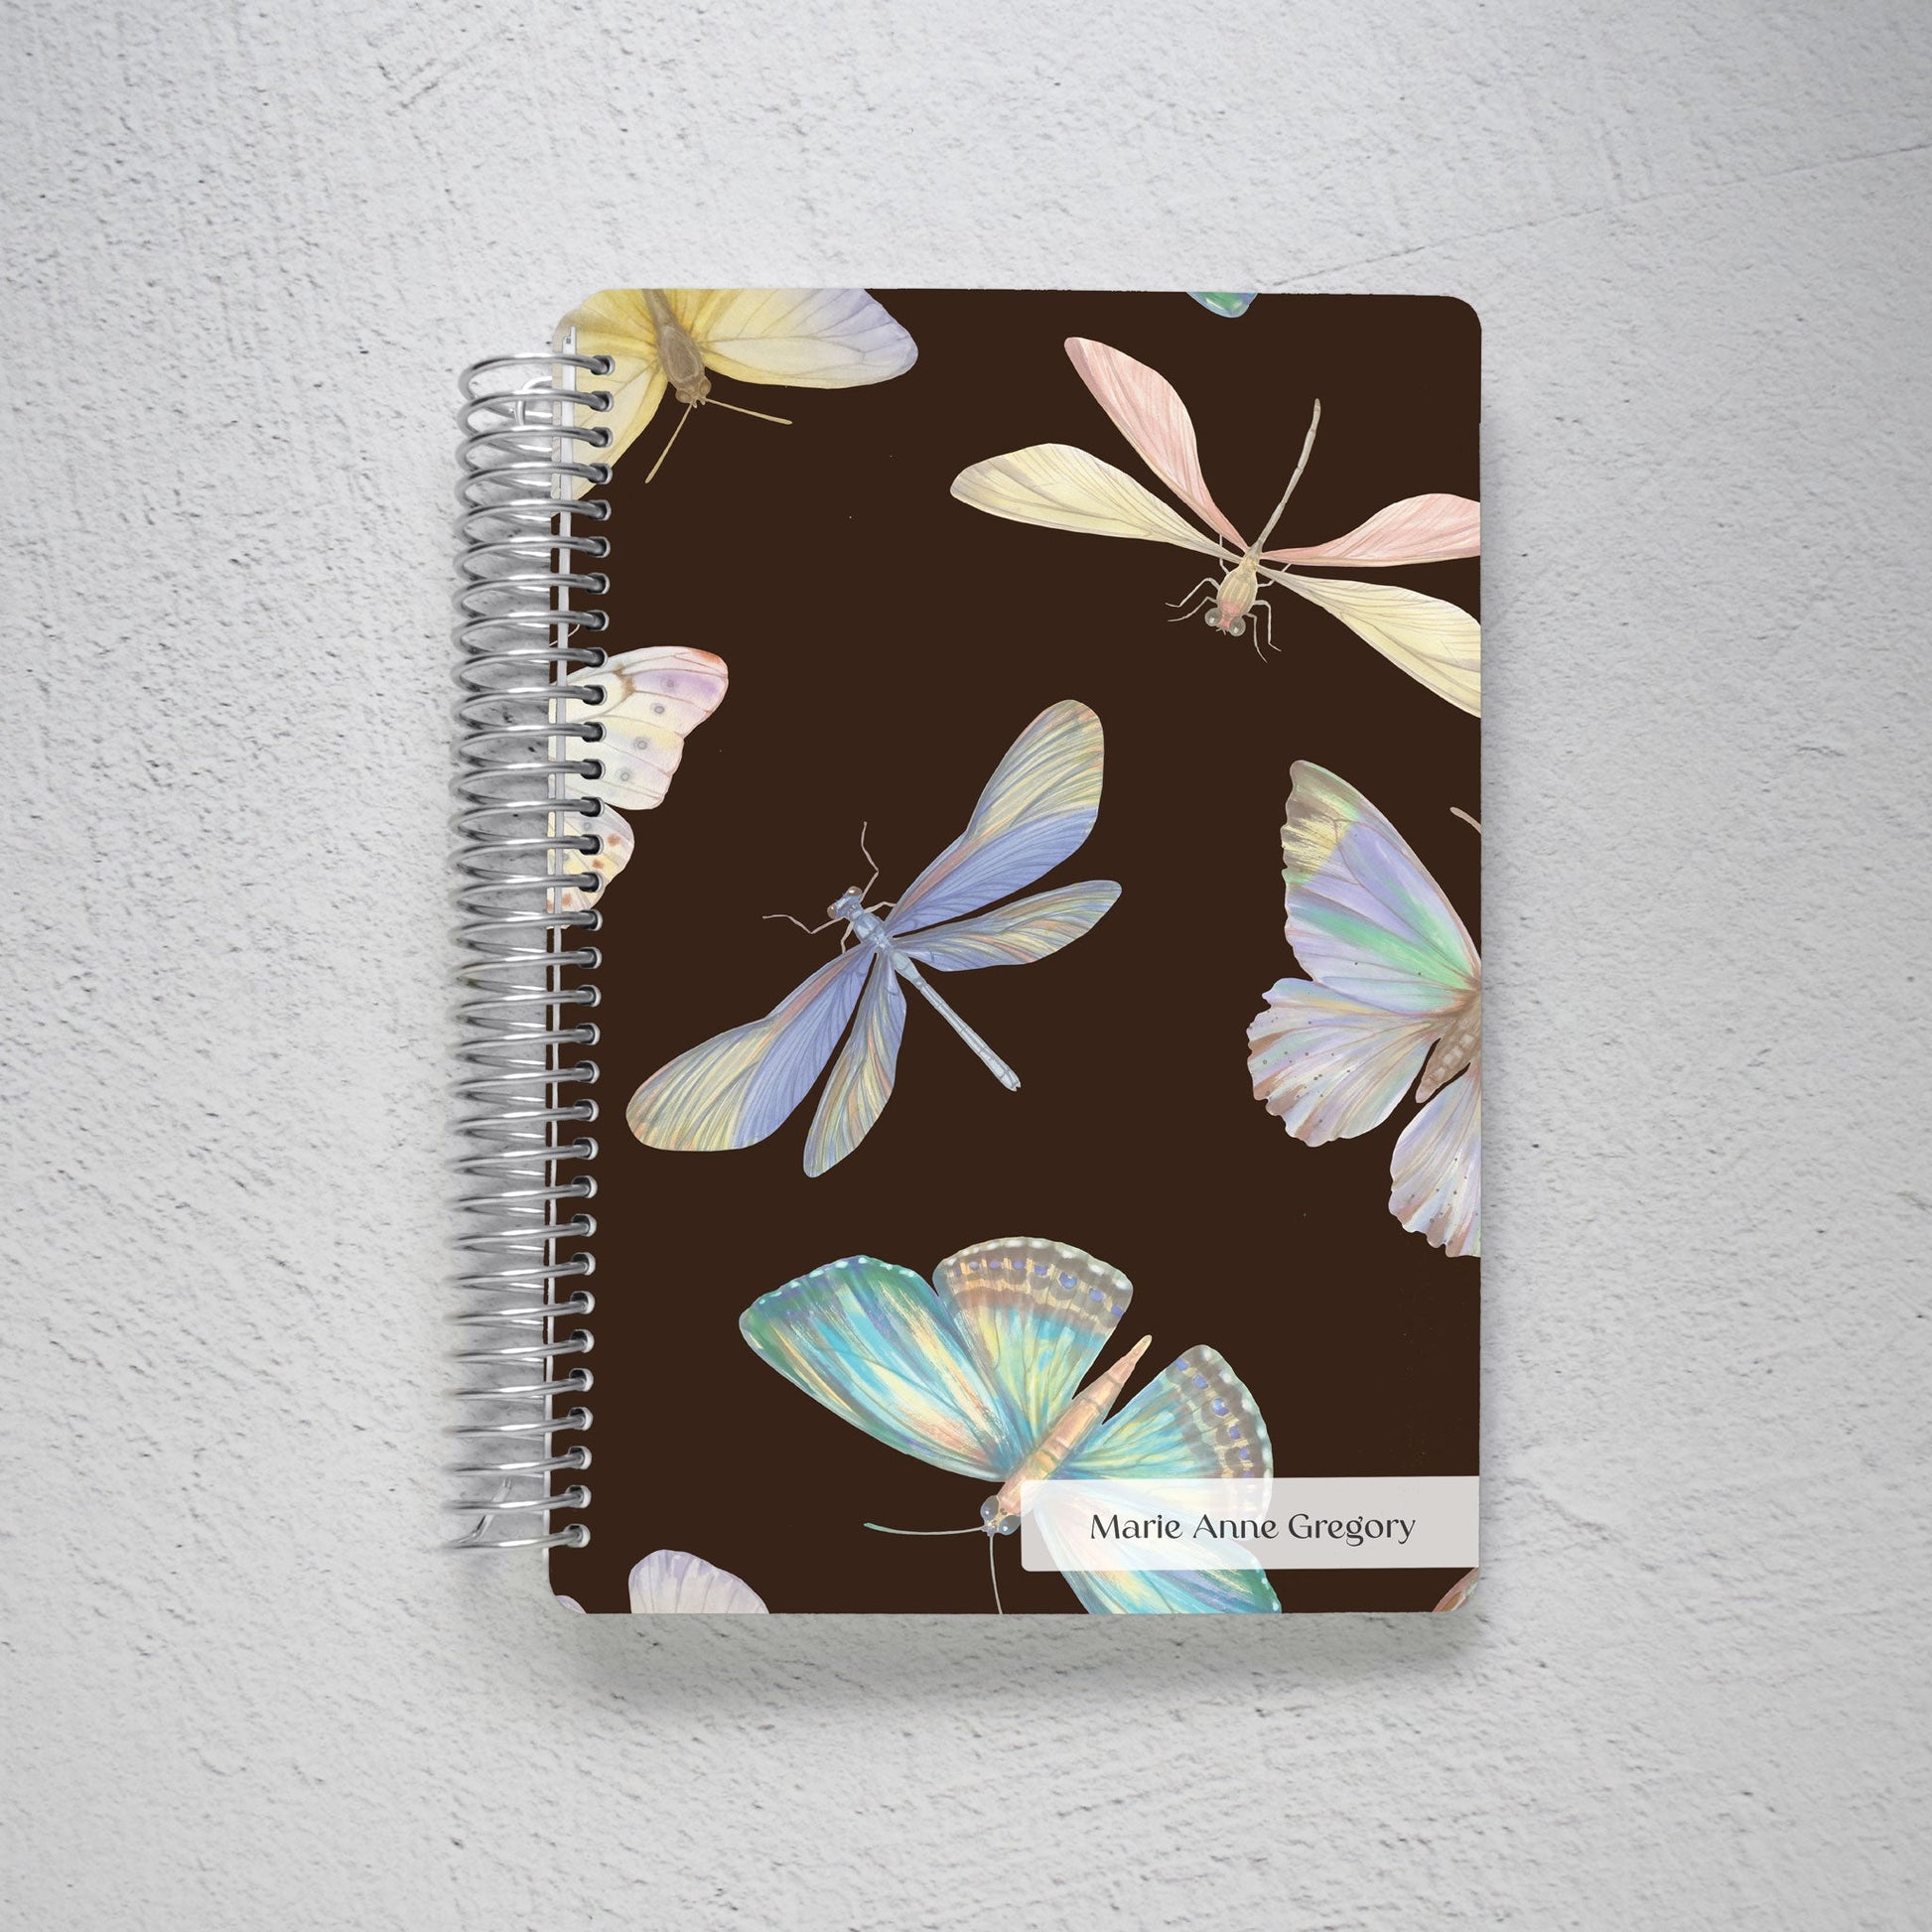 Personalized Notebook - Mariposa - Colibri Paper Co